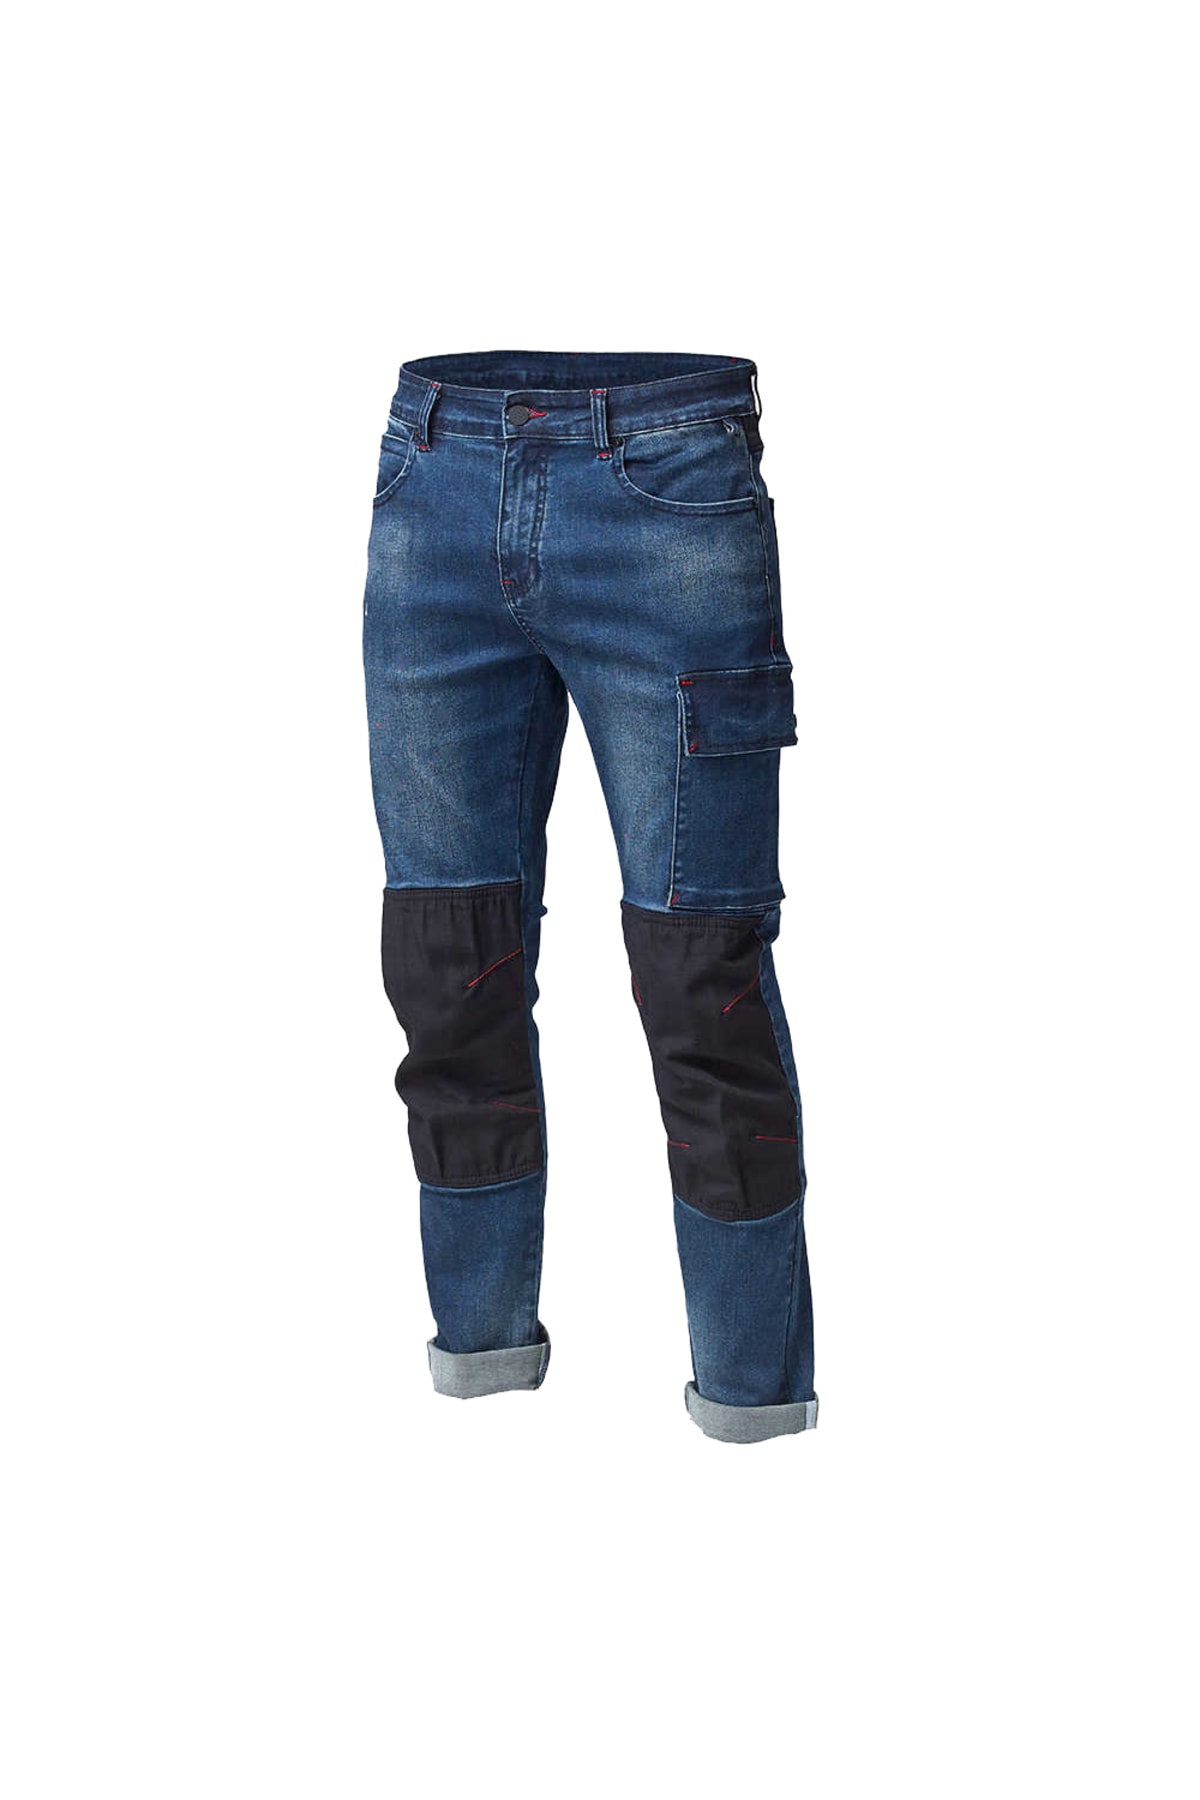 Özel Yapım Siggi Italyan Desing Taktikal Yürüyüş Iş Works Pantolon Jeans Tactical Outdoor Pantolonu AN10830